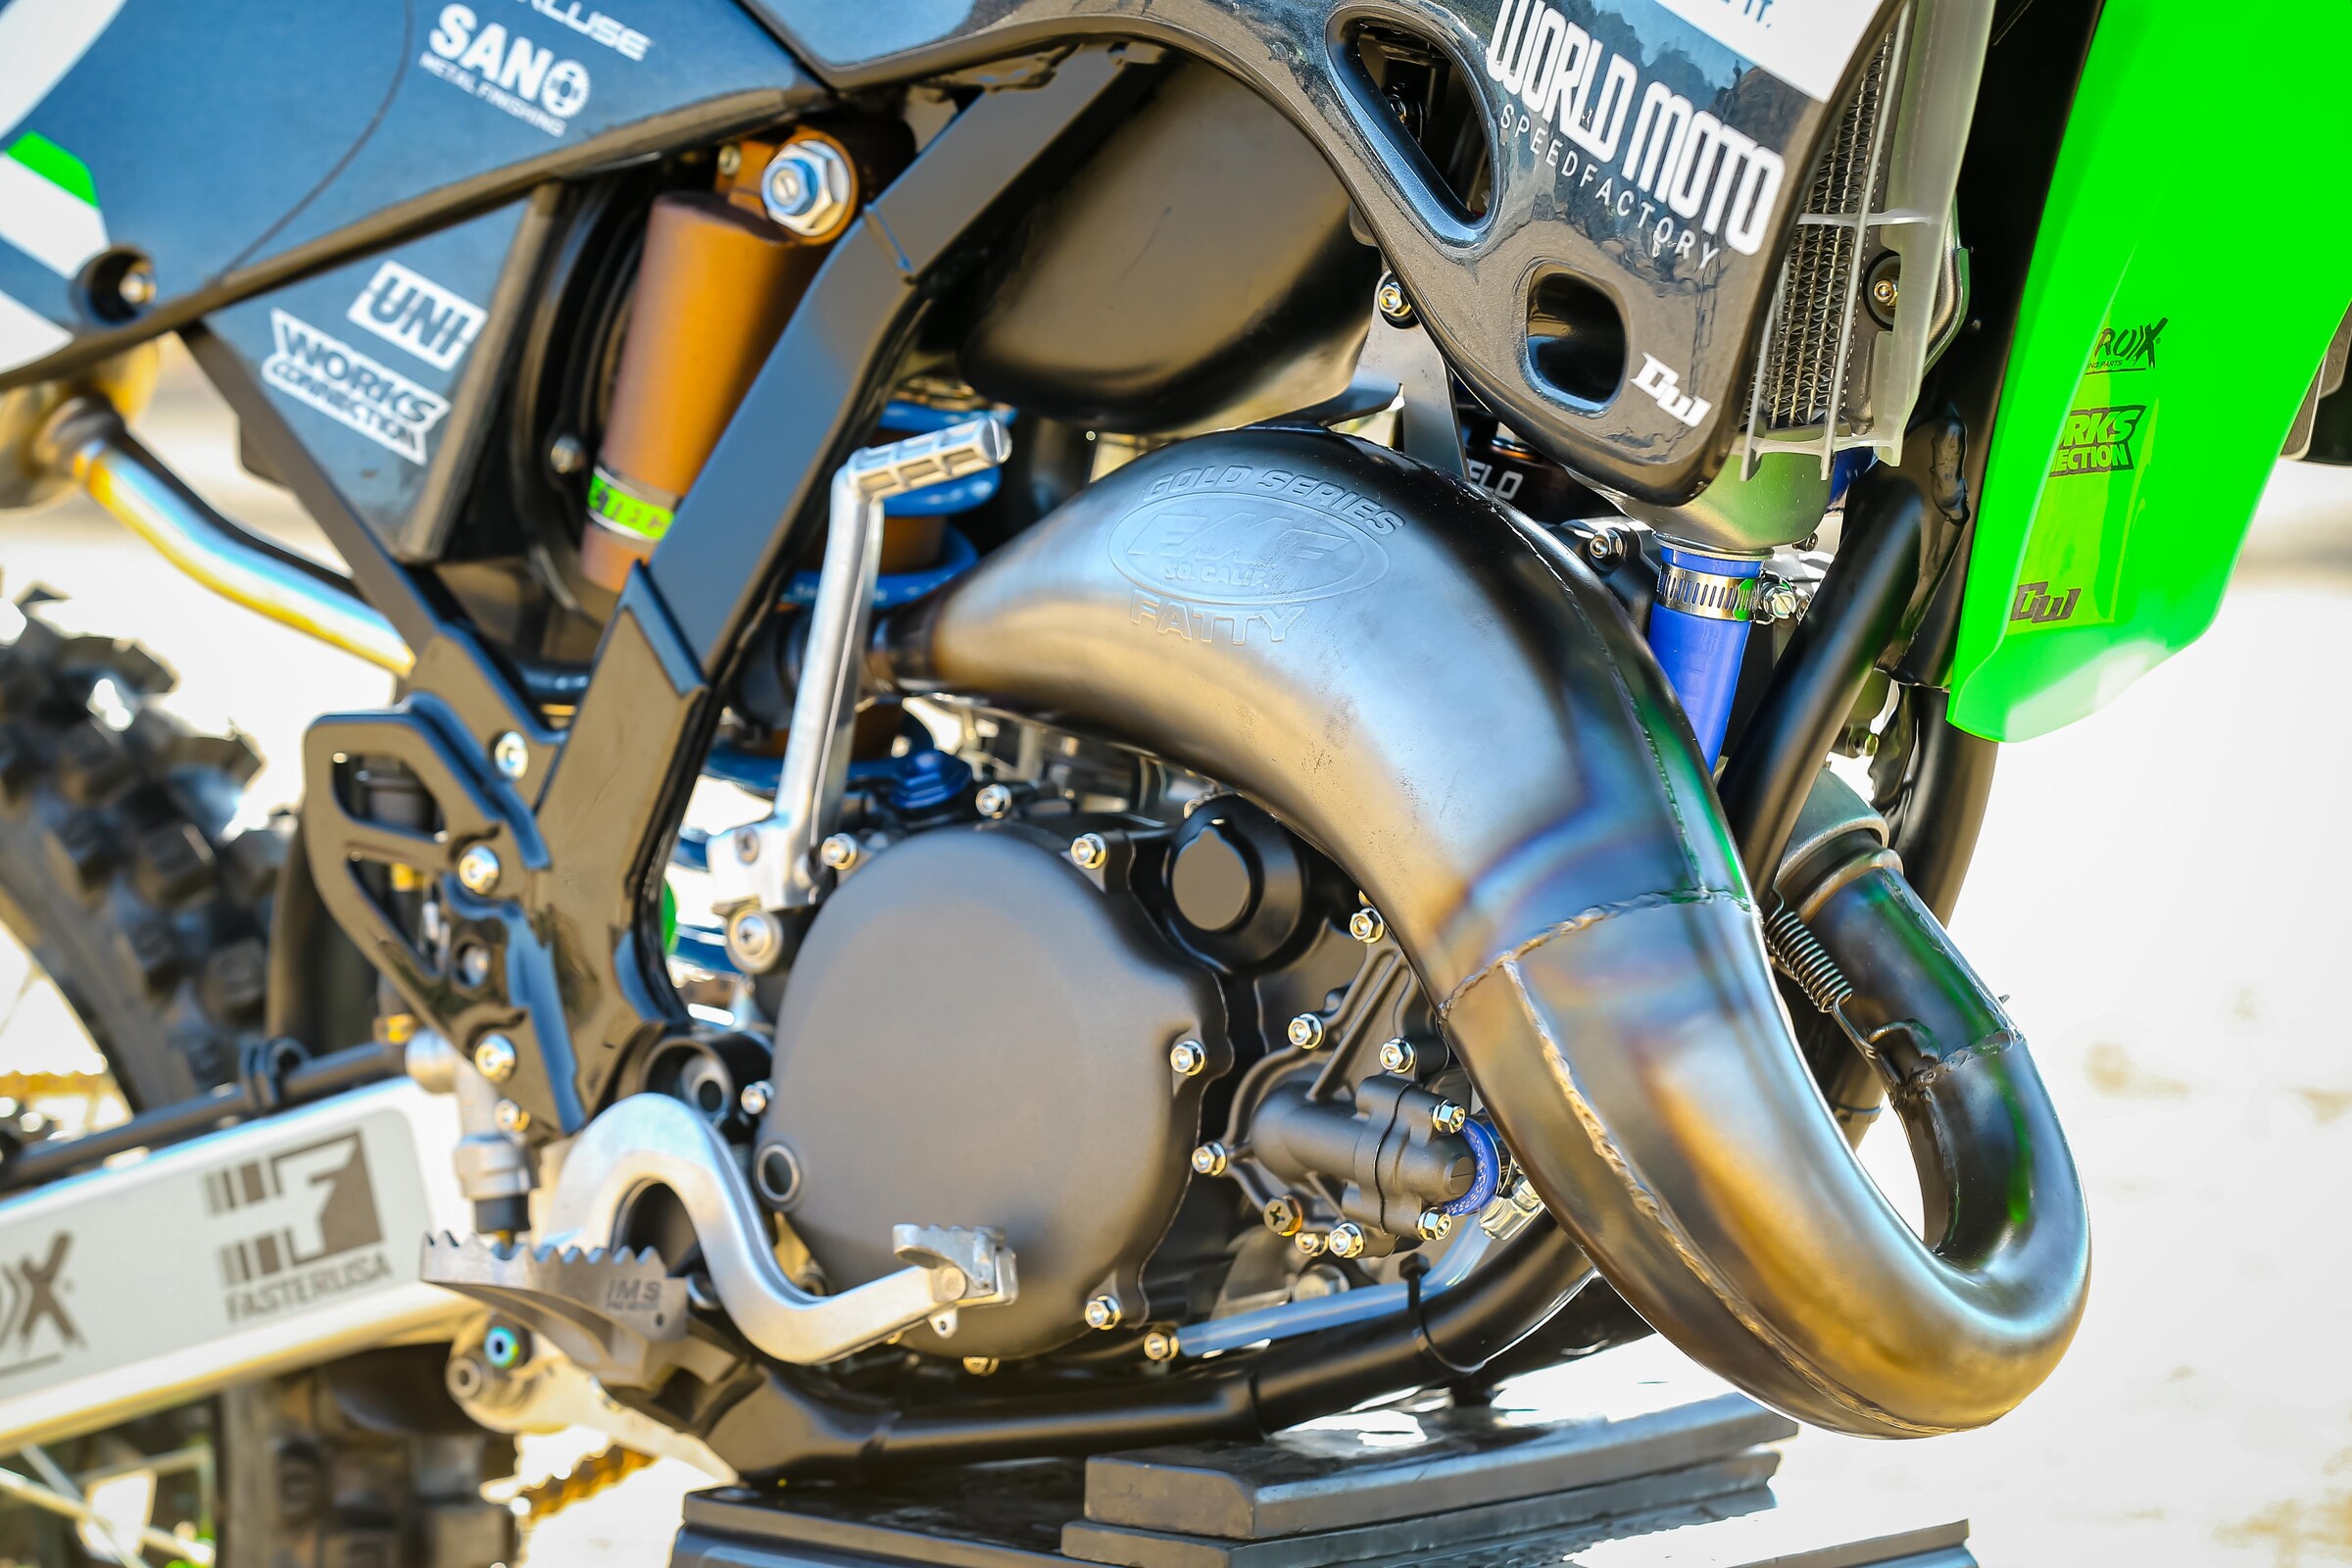 2002 Kawasaki KX125 Two-Stroke Motocross Bike Build Garage Build 